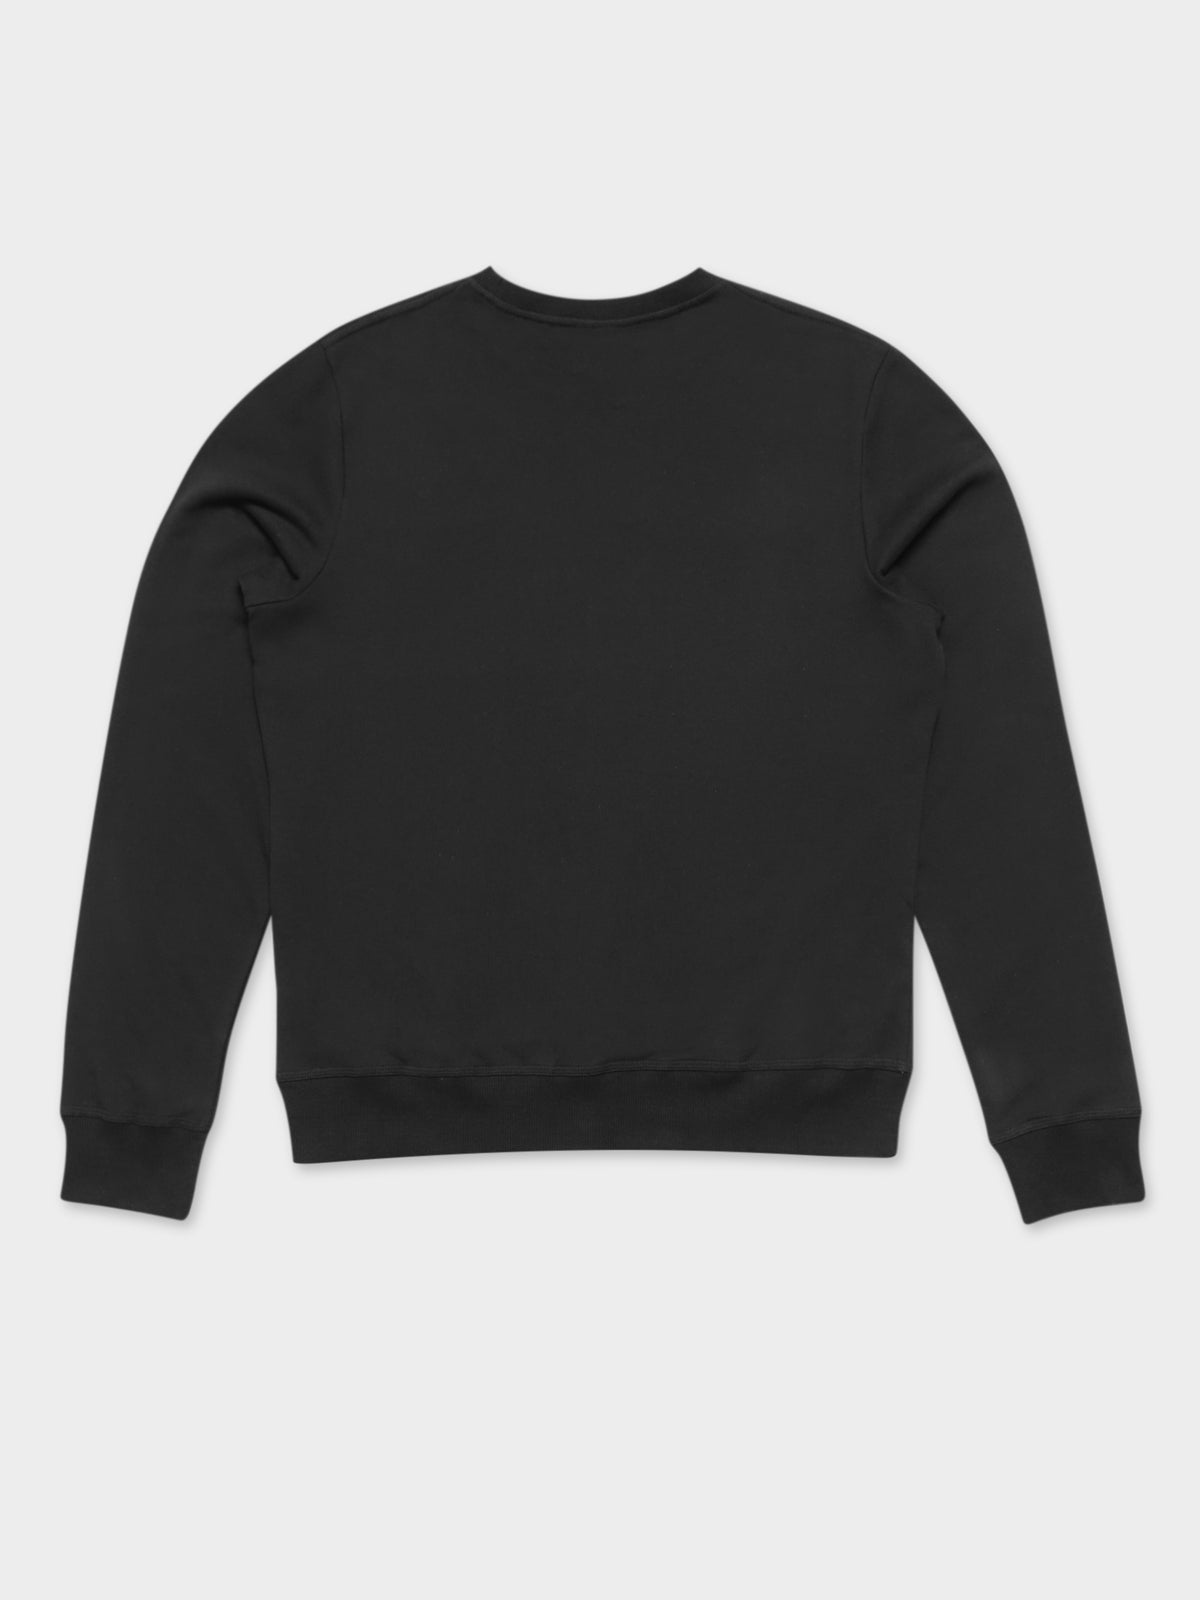 Score Crew Sweater in Black